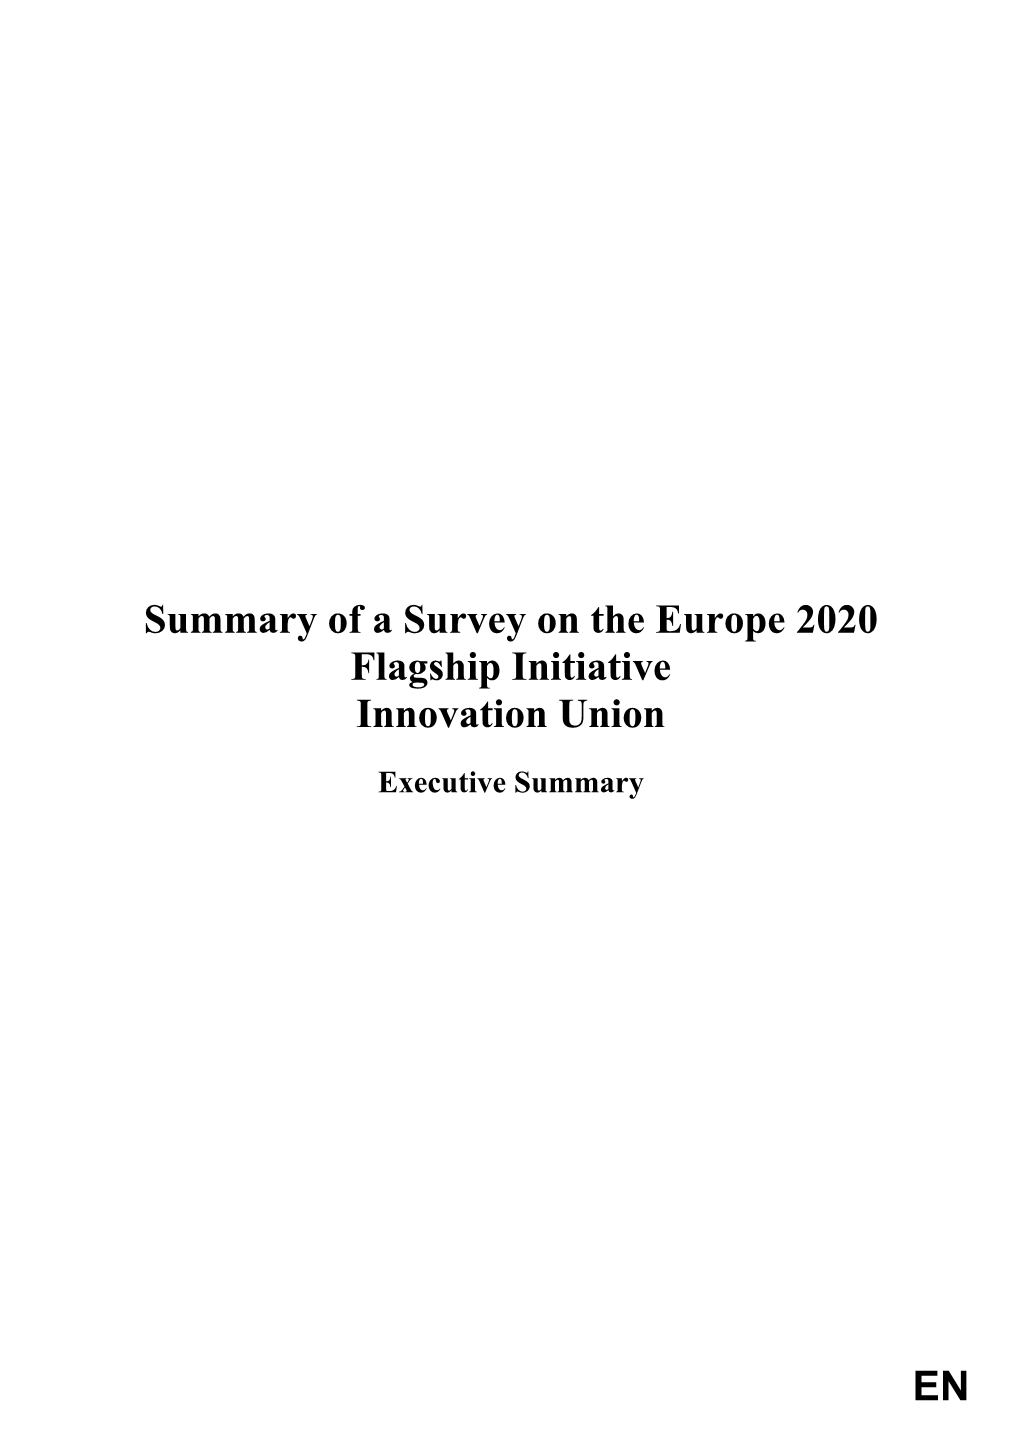 Executive Summary of Summary of a Survey on the Europe 2020 Flagship Initiative Innovation Union